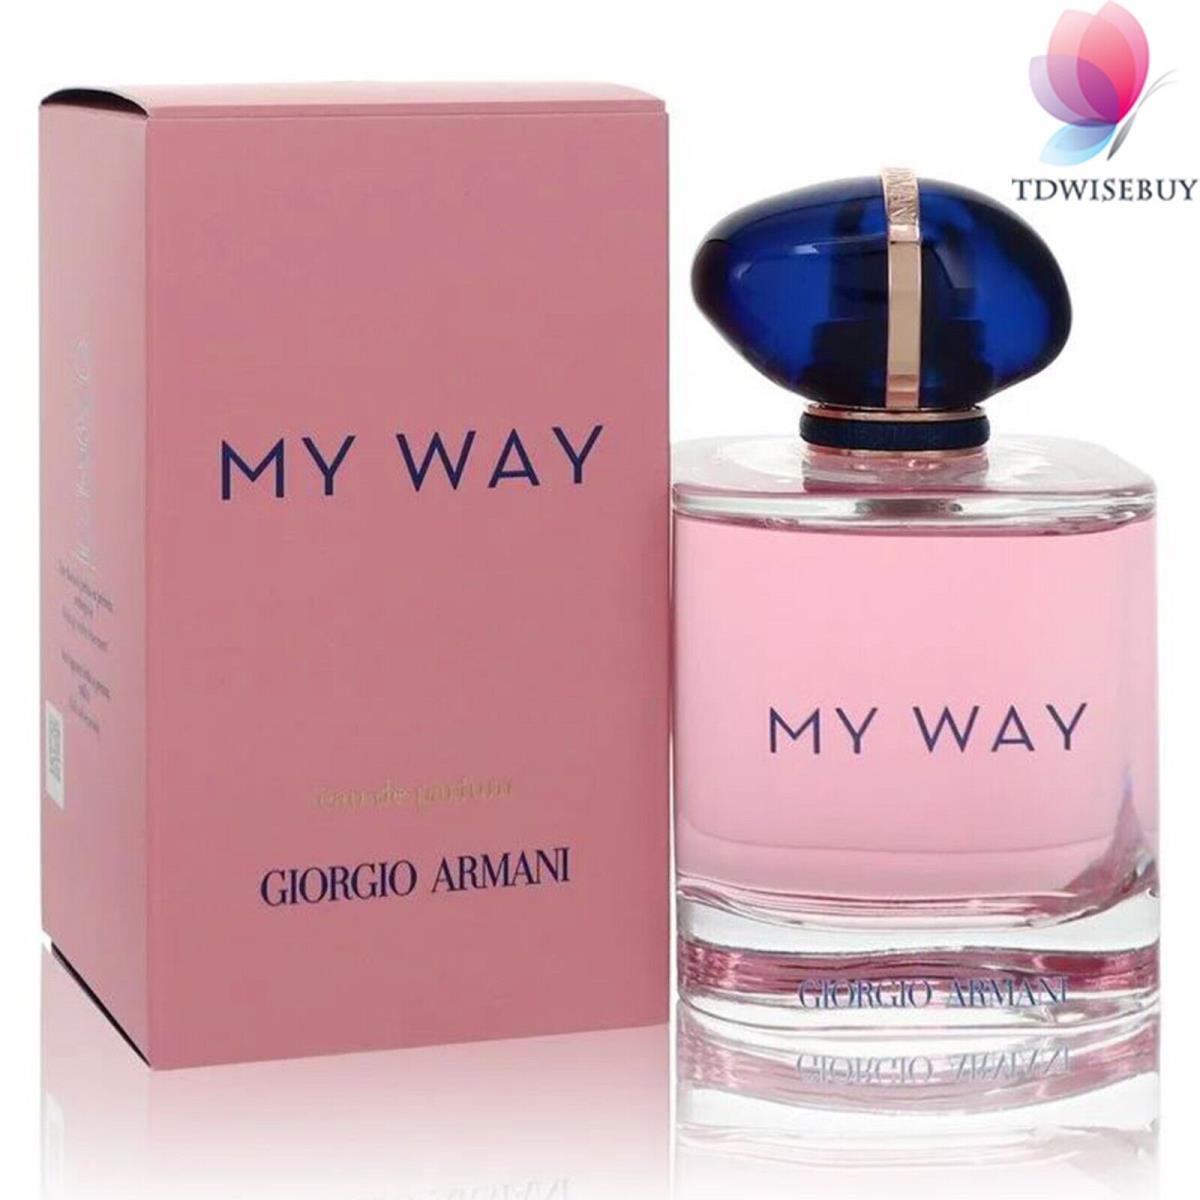 Giorgio Armani My Way Perfume Women by Giorgio Armani Eau De Parfum Spray 3 oz